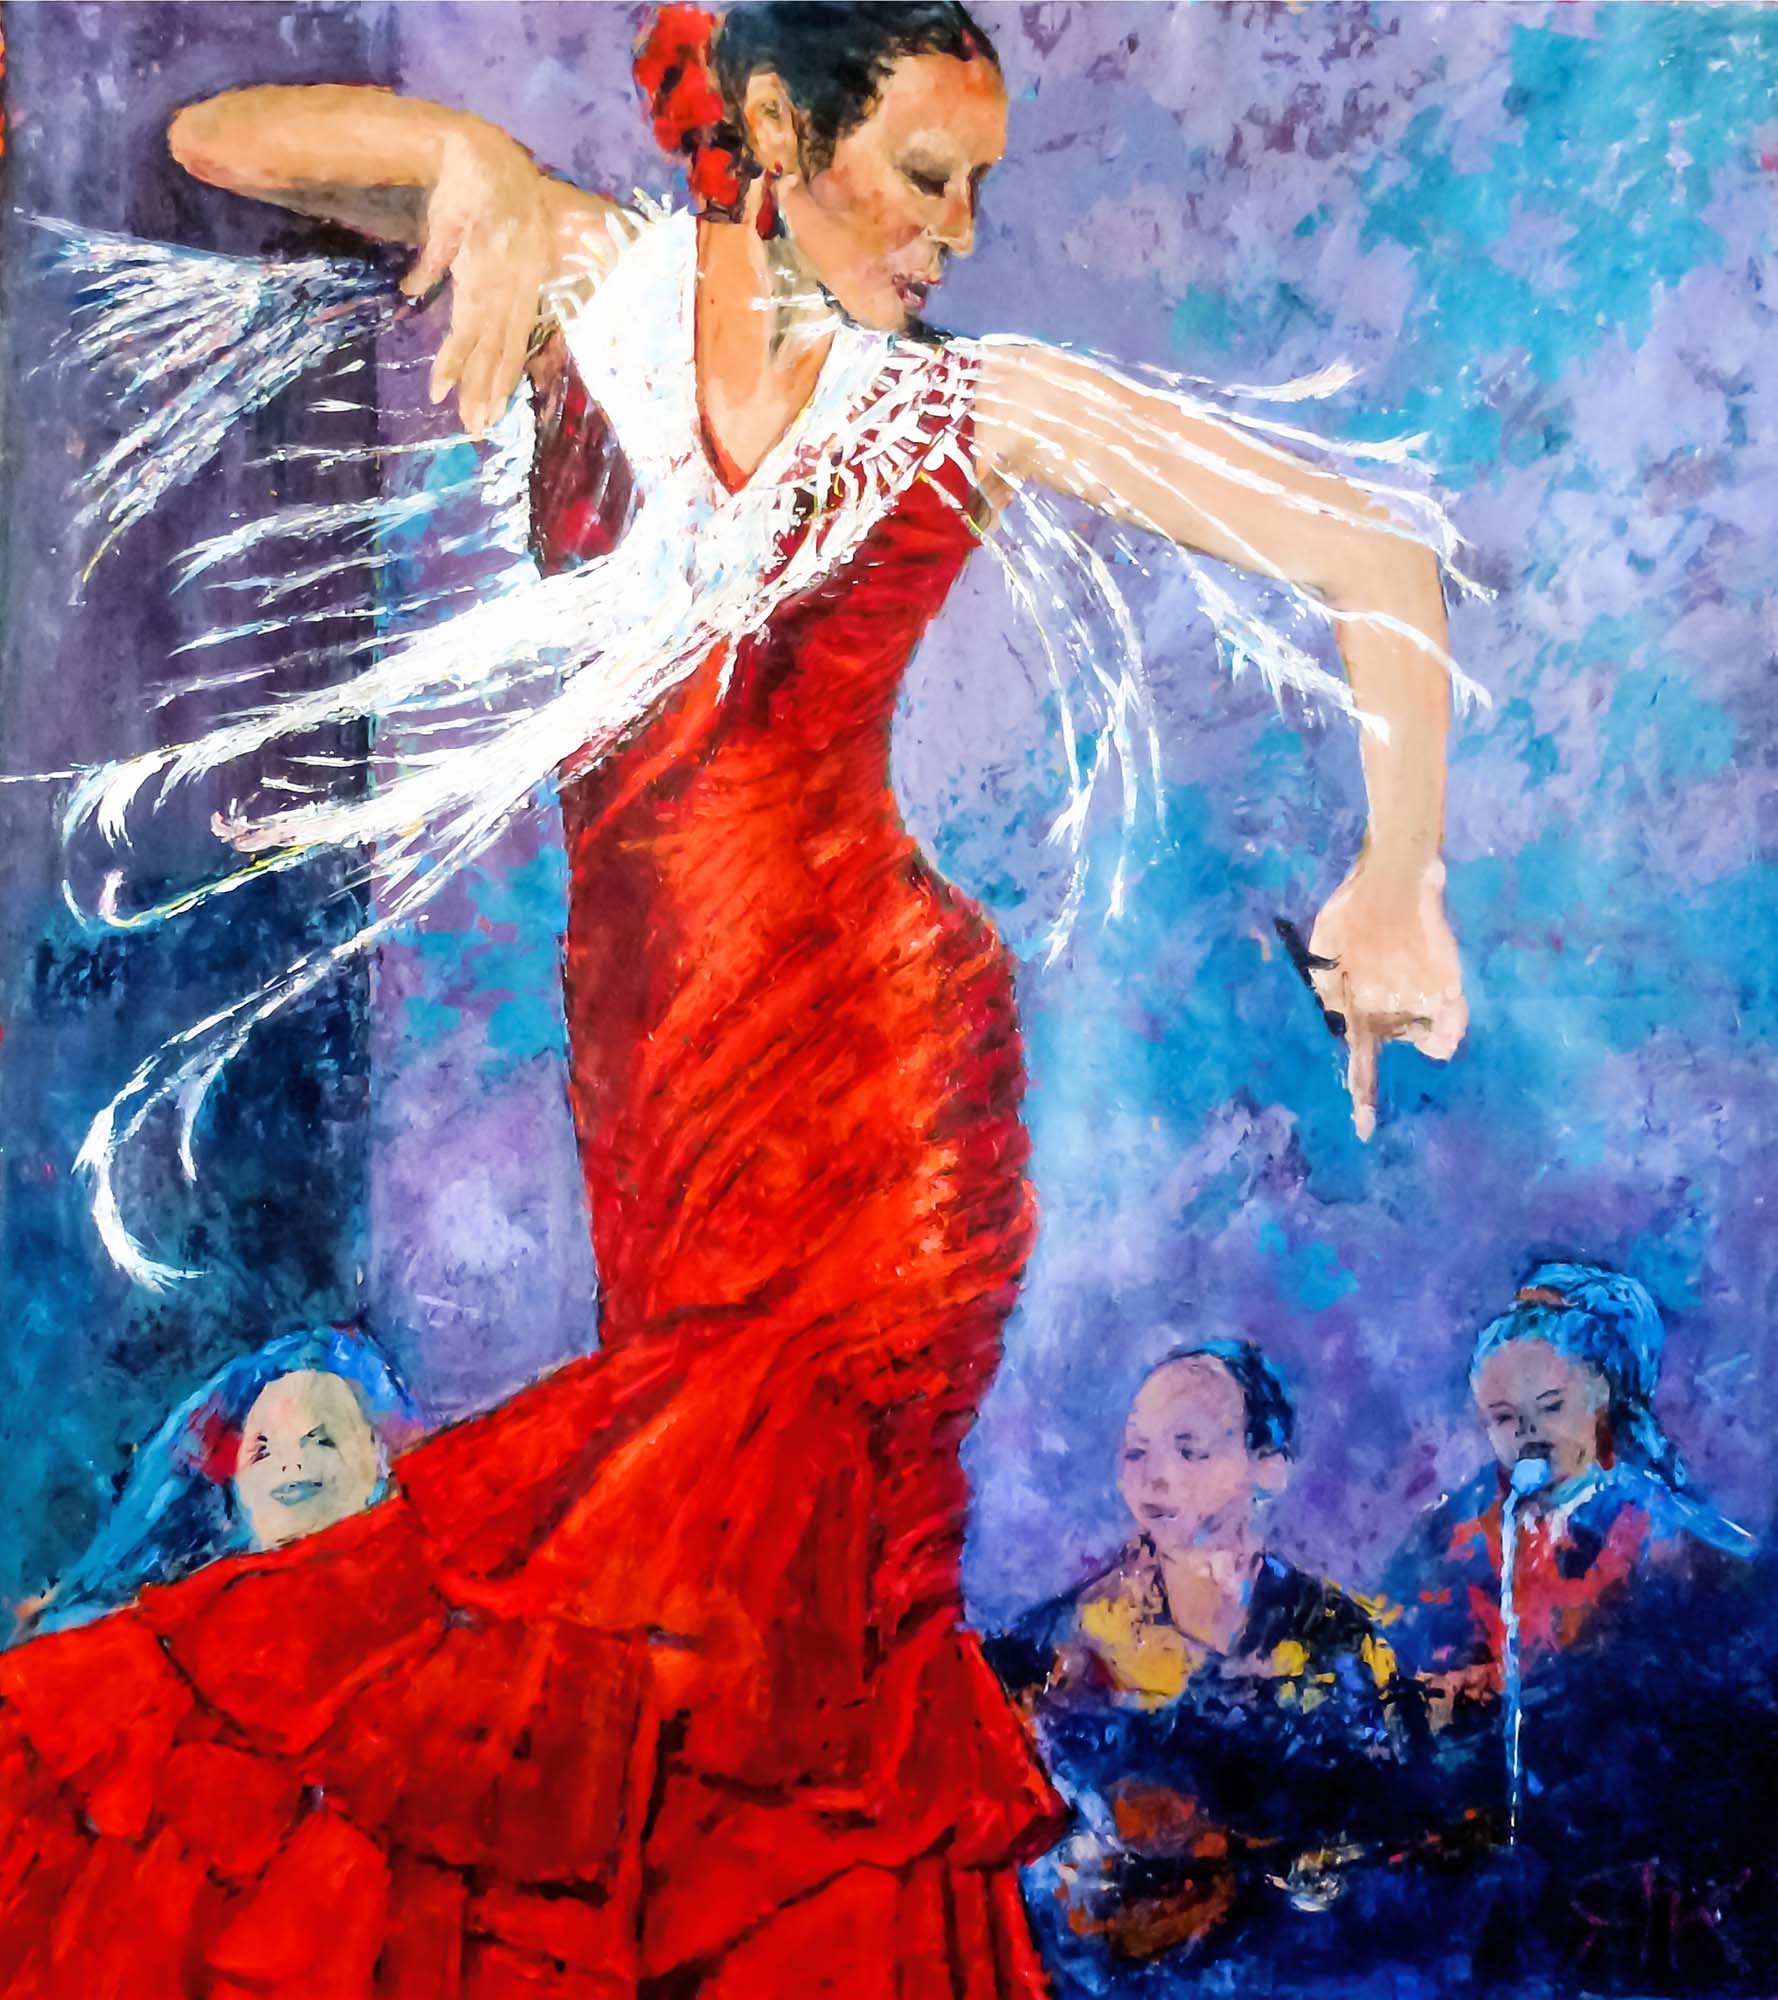 Flamenco dancer in red dress, Spain by Ria Kieboom